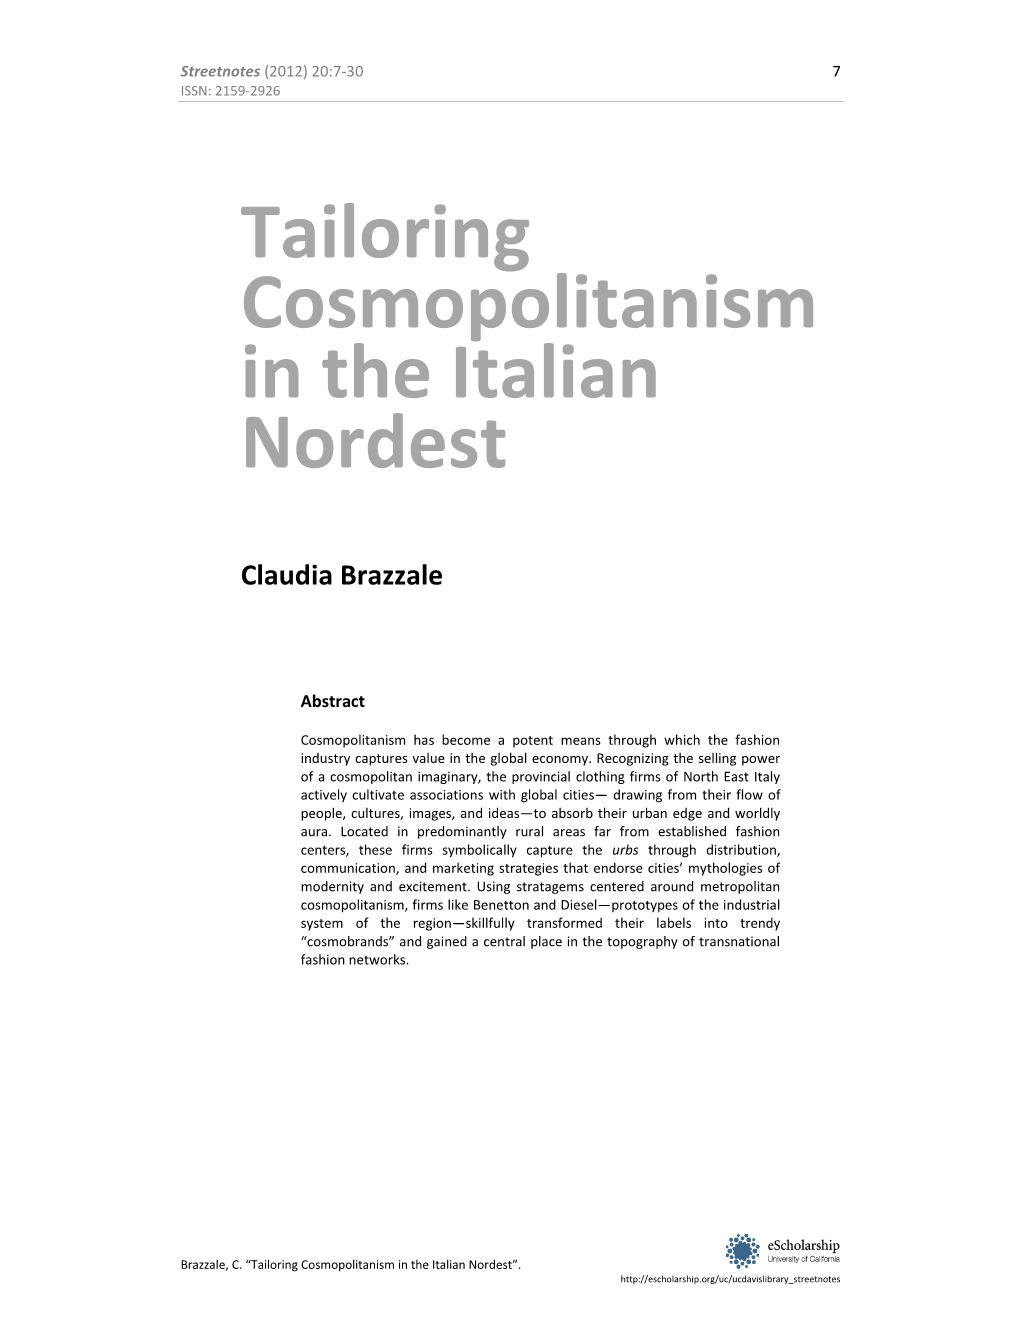 Tailoring Cosmopolitanism in the Italian Nordest